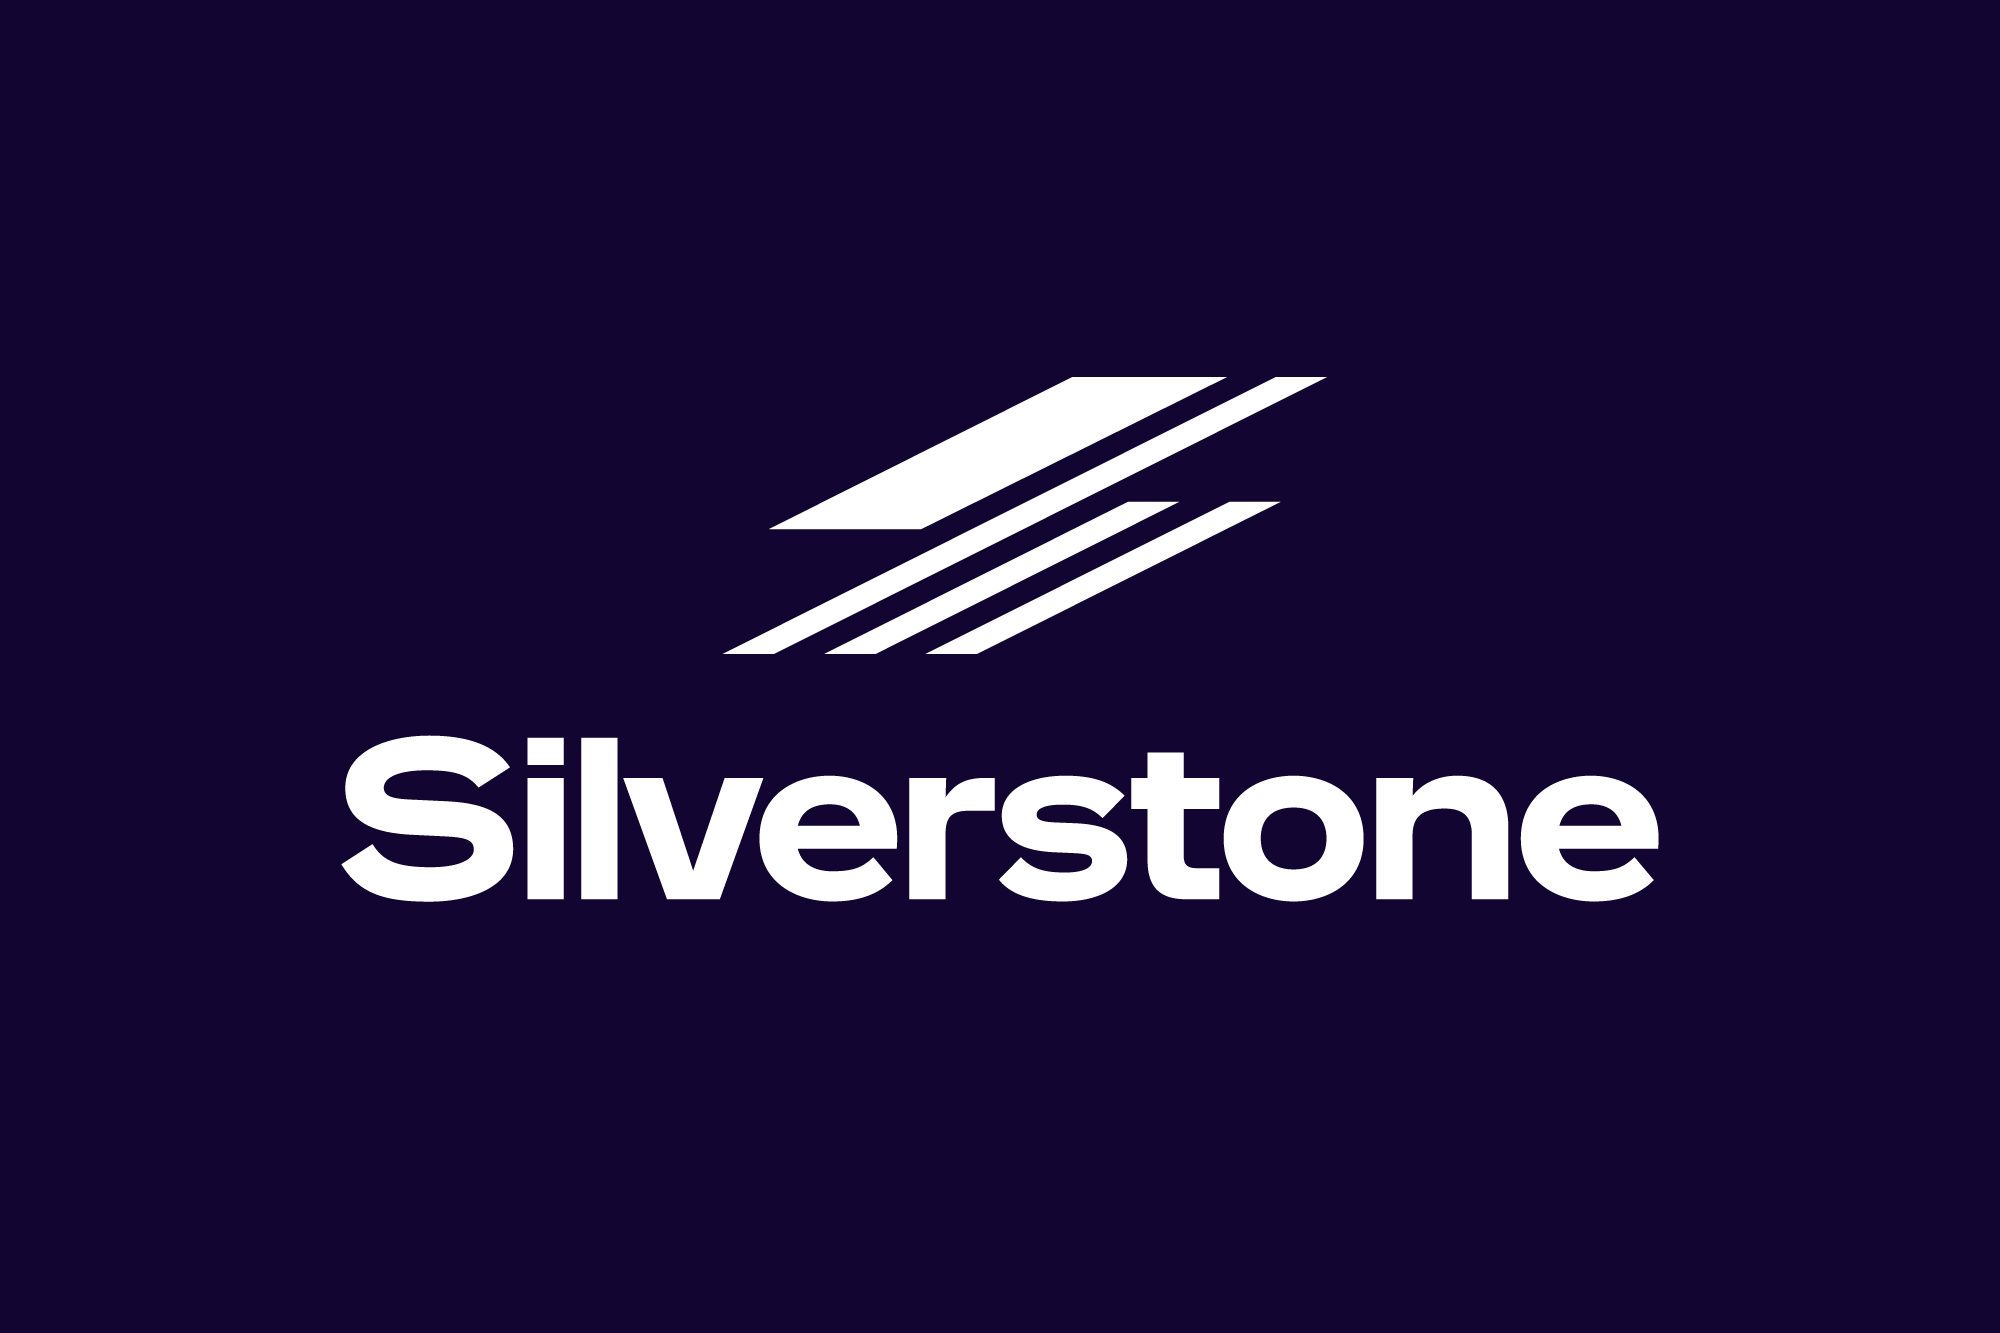 Silverstone F1